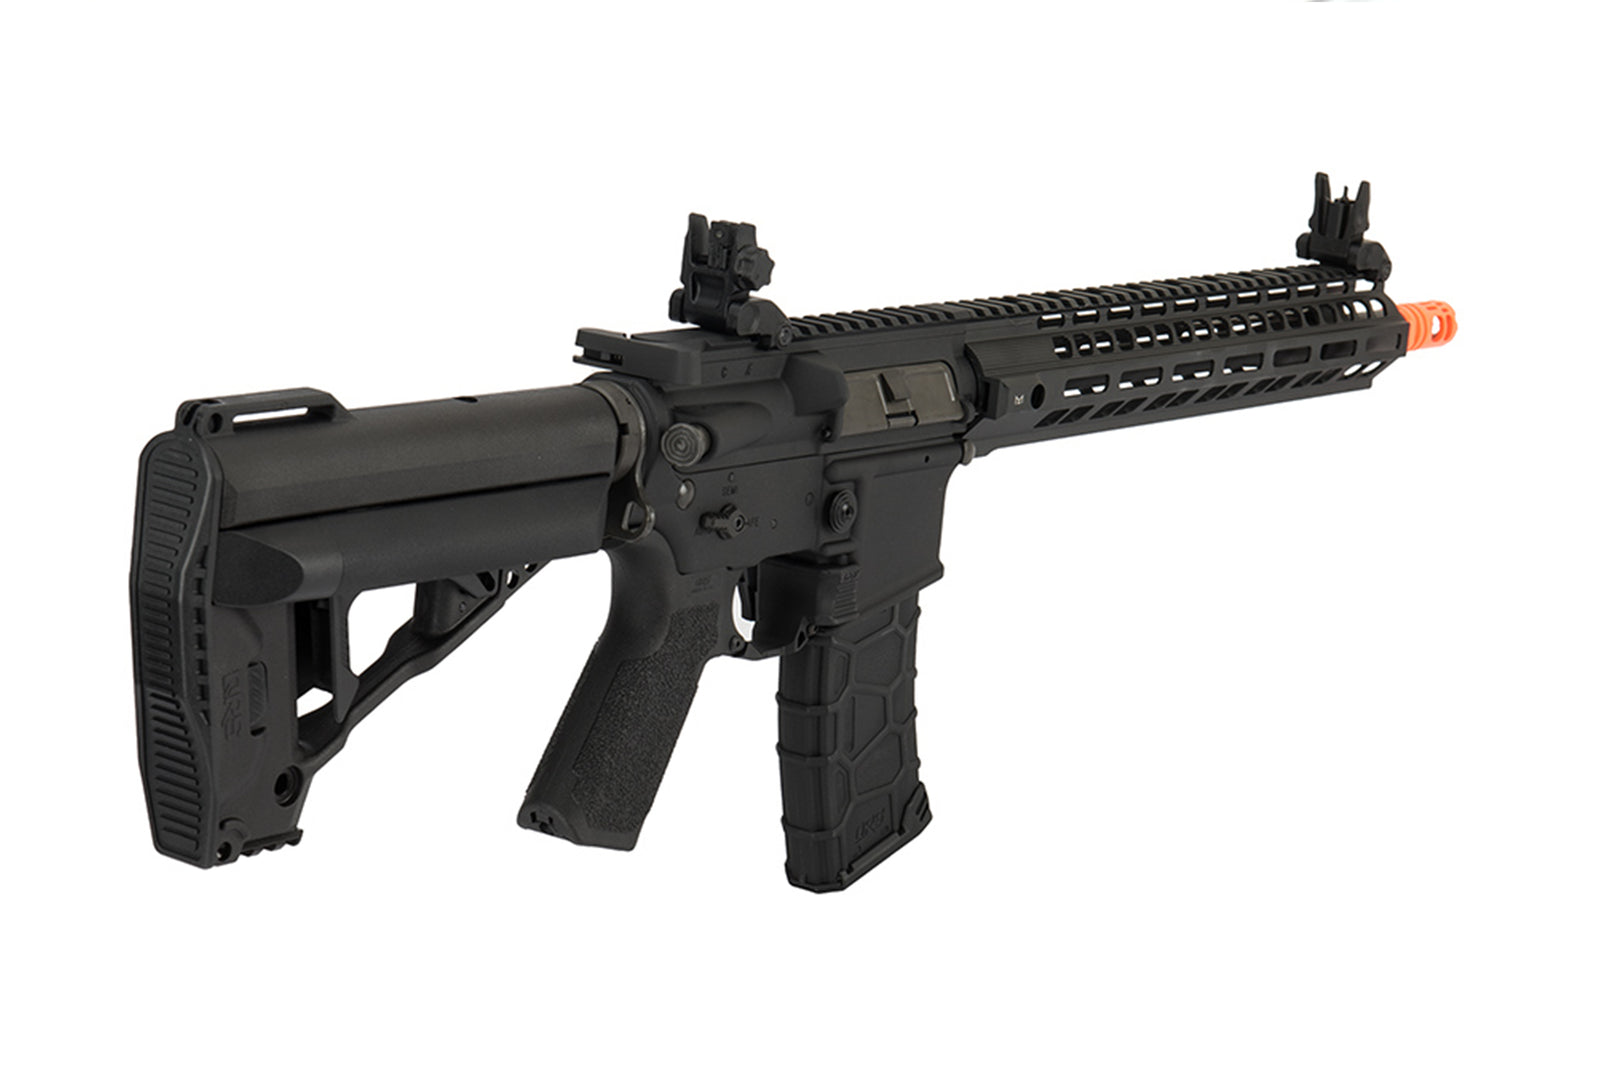 Elite Force/VFC Avalon Gen2 Full Metal VR16 Saber Carbine M4 AEG Rifle with M-LOK Handguard